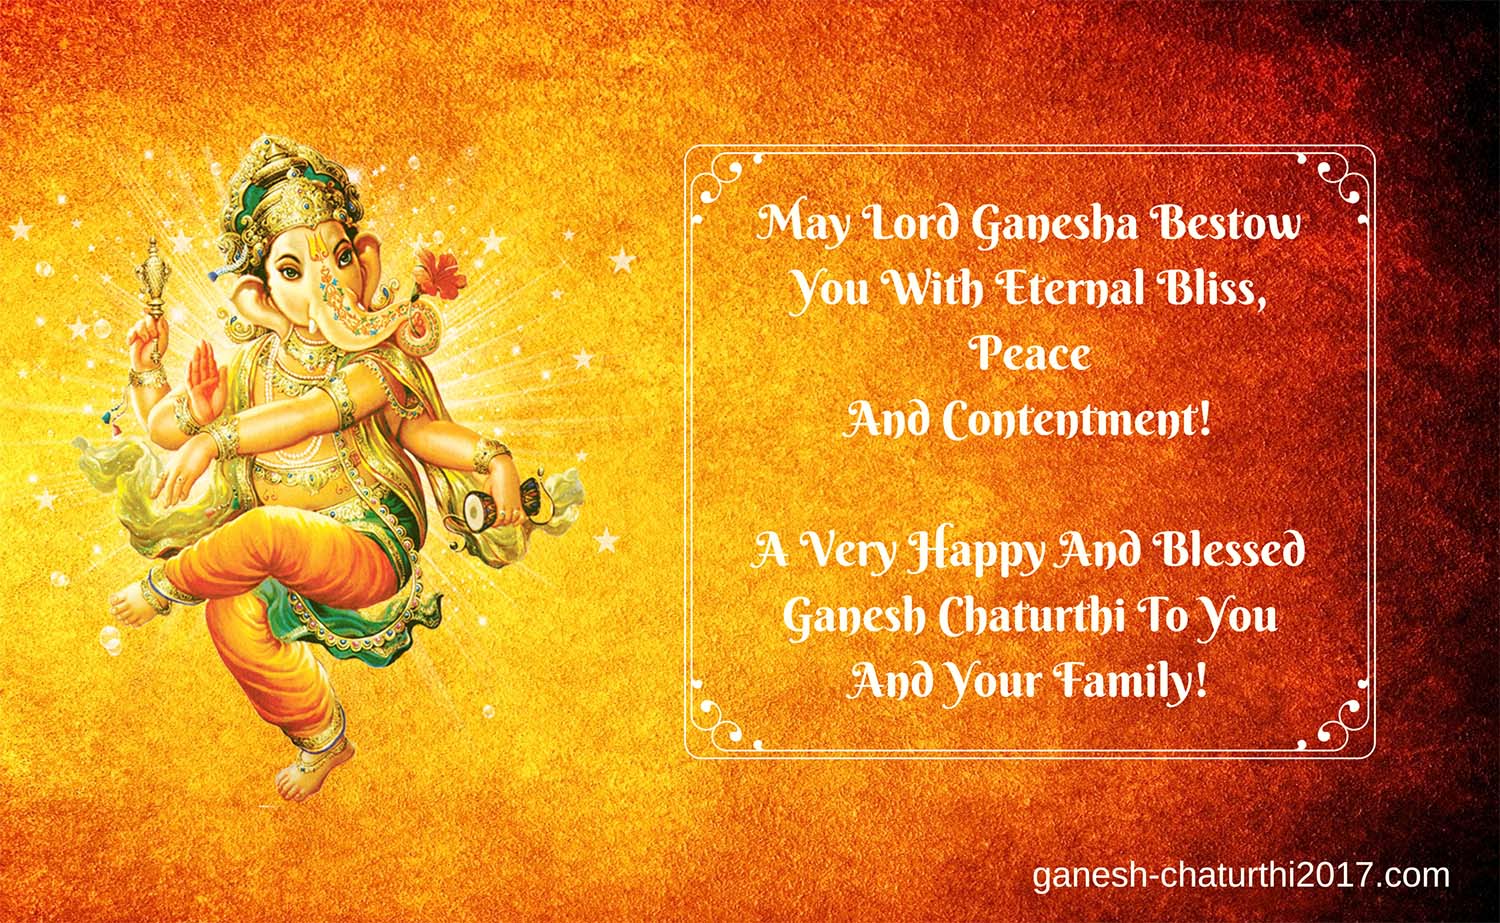 Ganesha Festival wishes